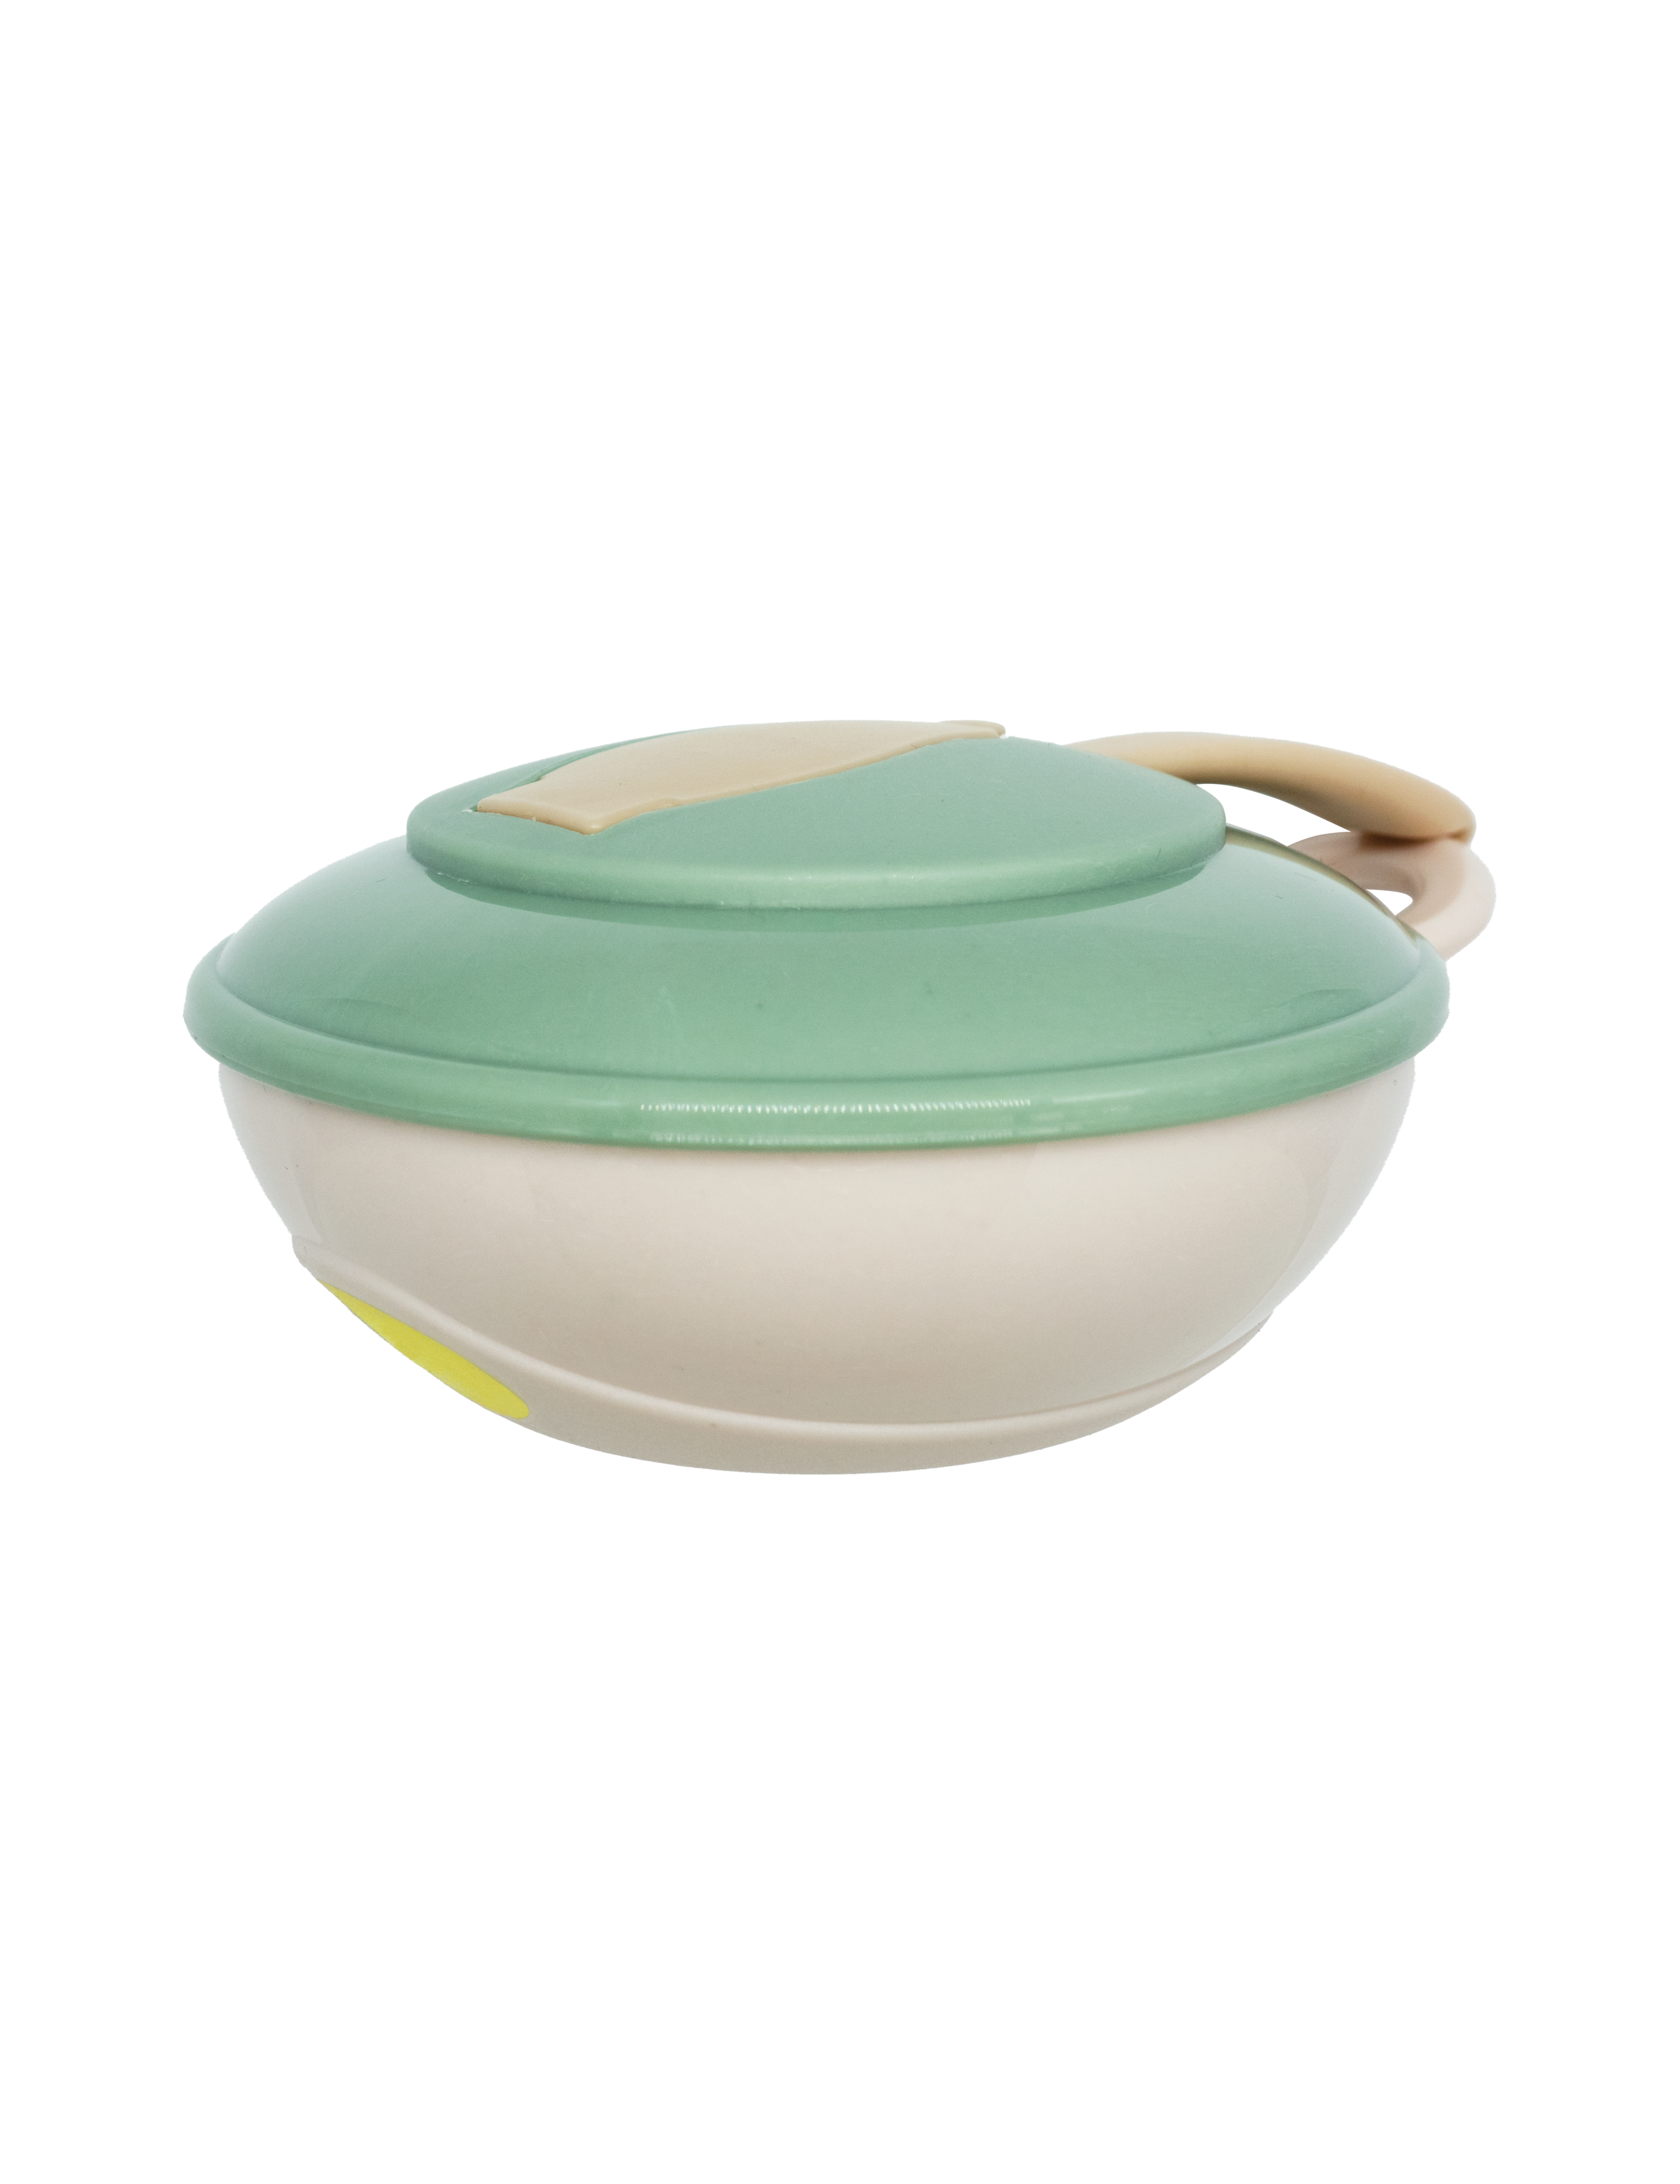 Heat-sensing Feeding Bowl with Spoon